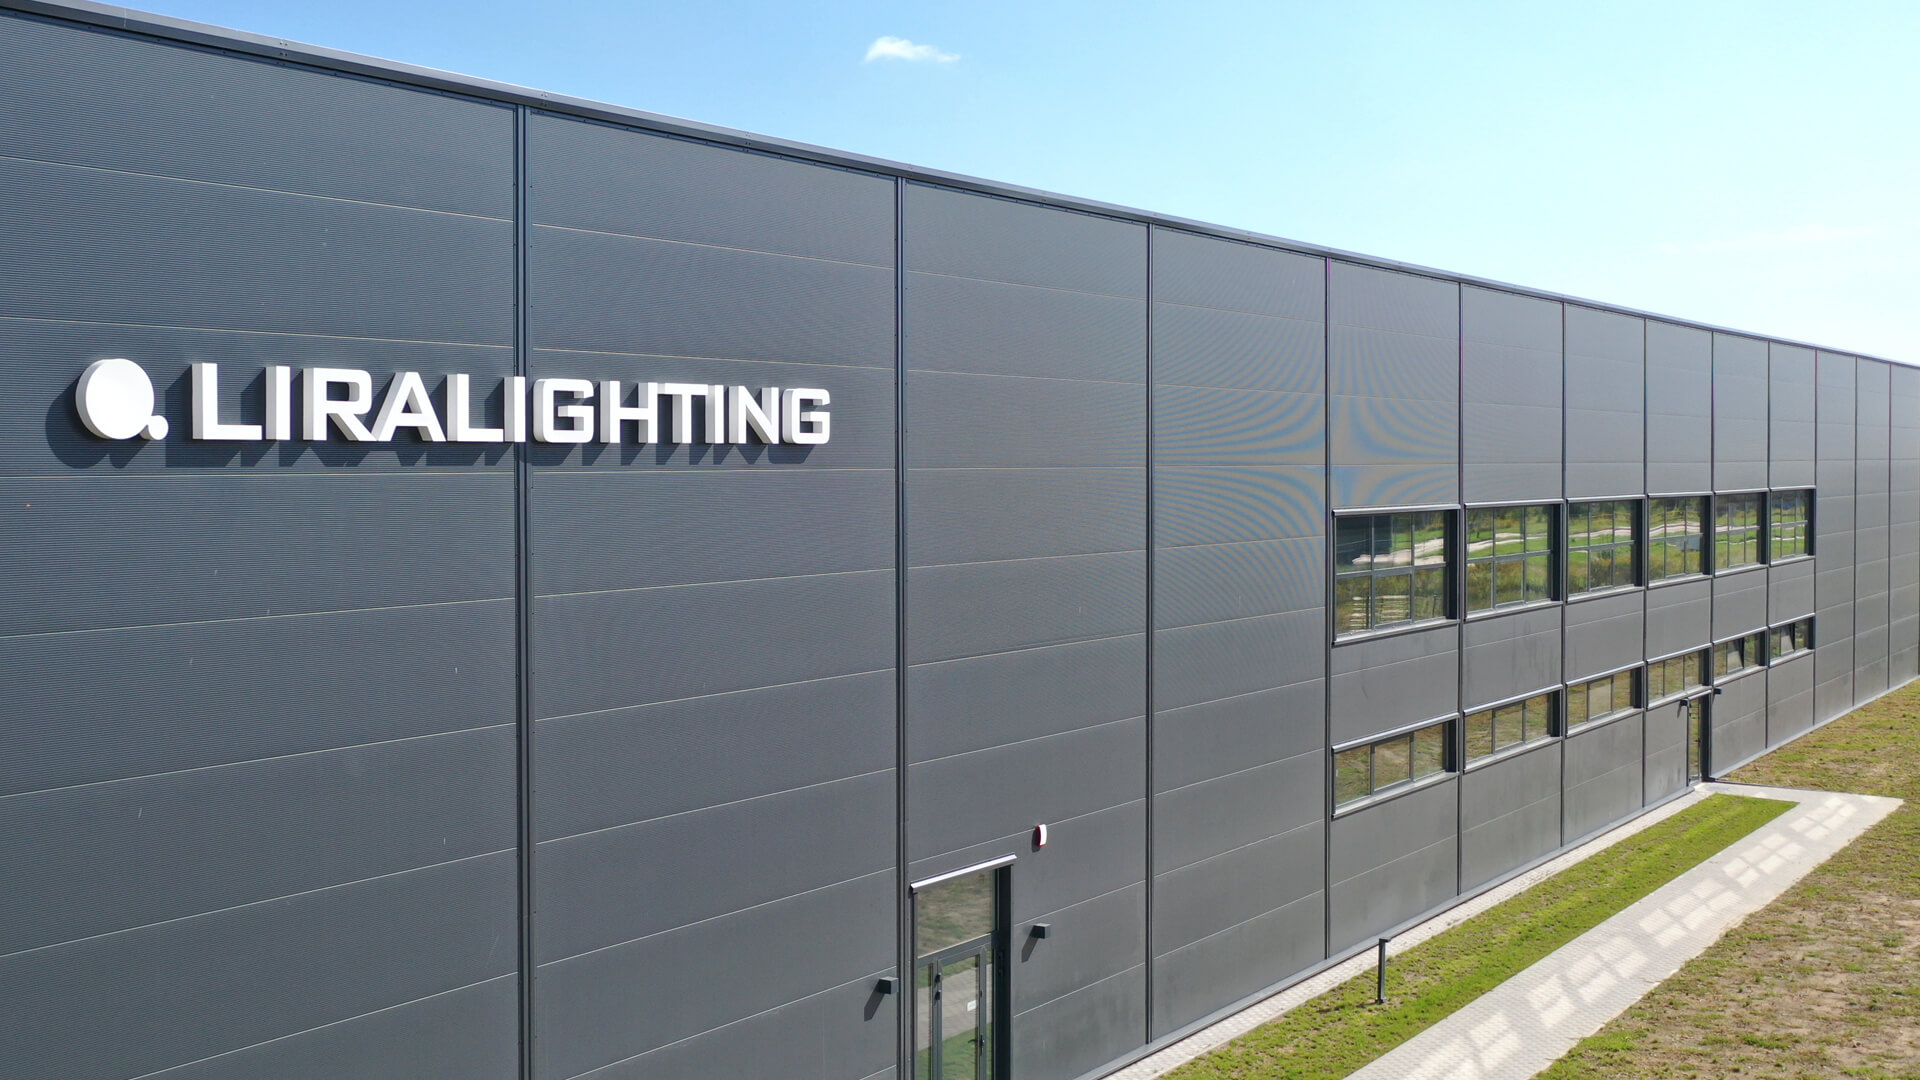 Lettere illuminate Liralighting - Lettere luminose 3D a LED su sala industriale in bianco.